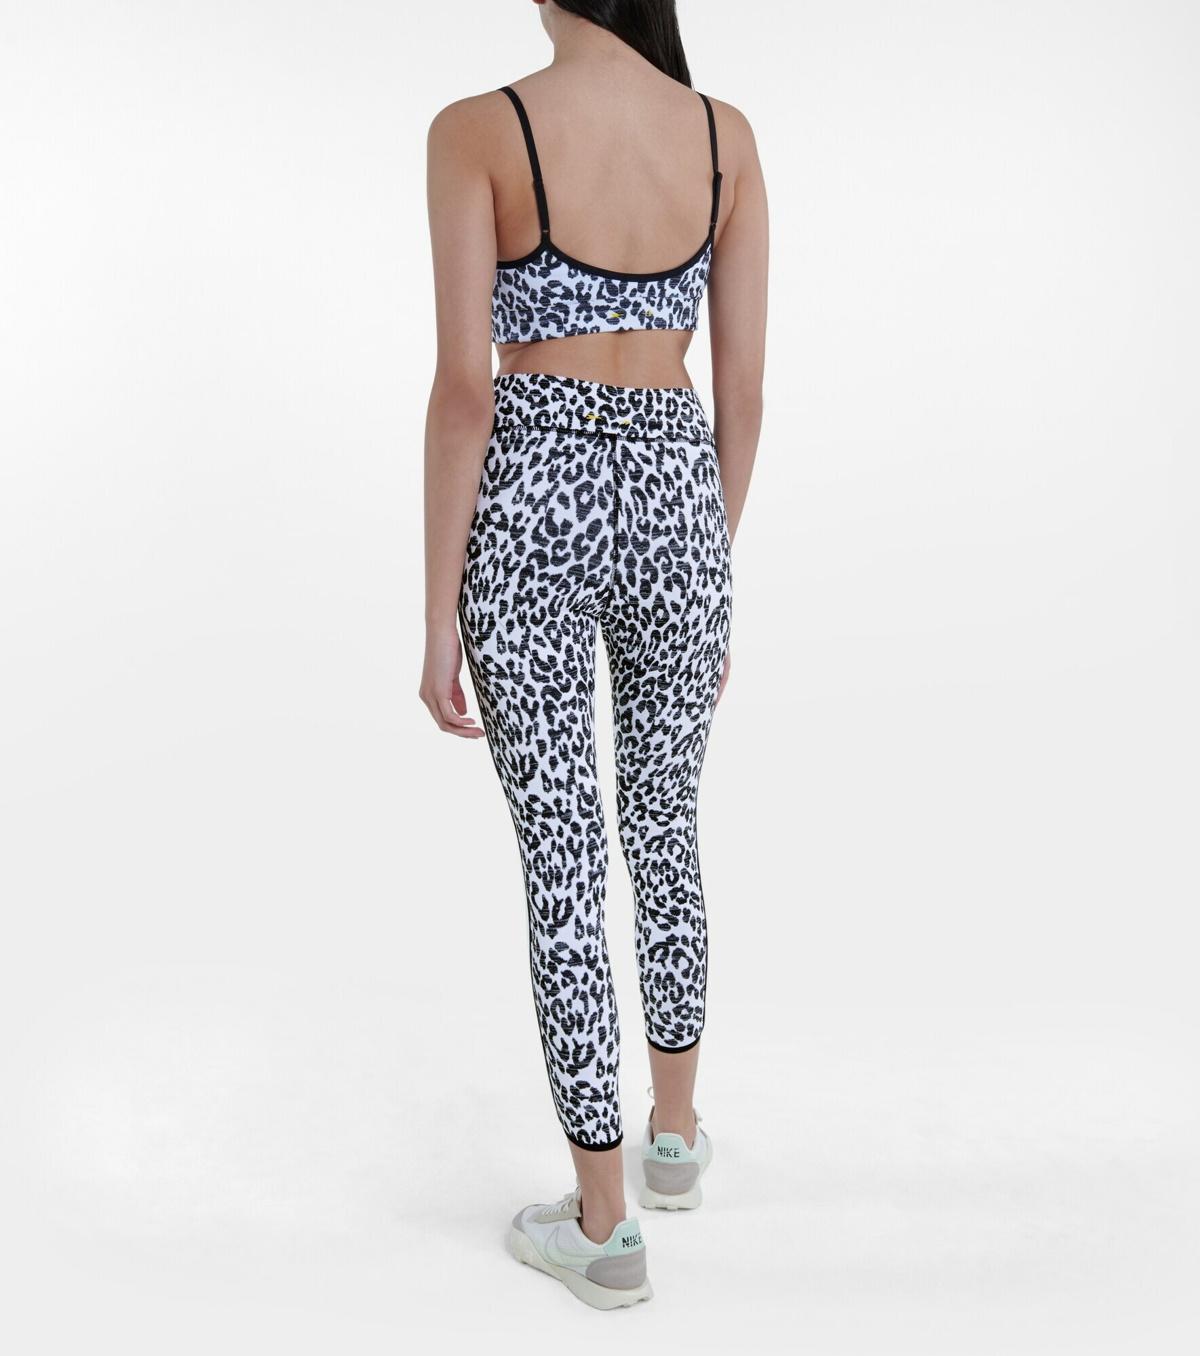 The Upside - Dance leopard-print leggings The Upside